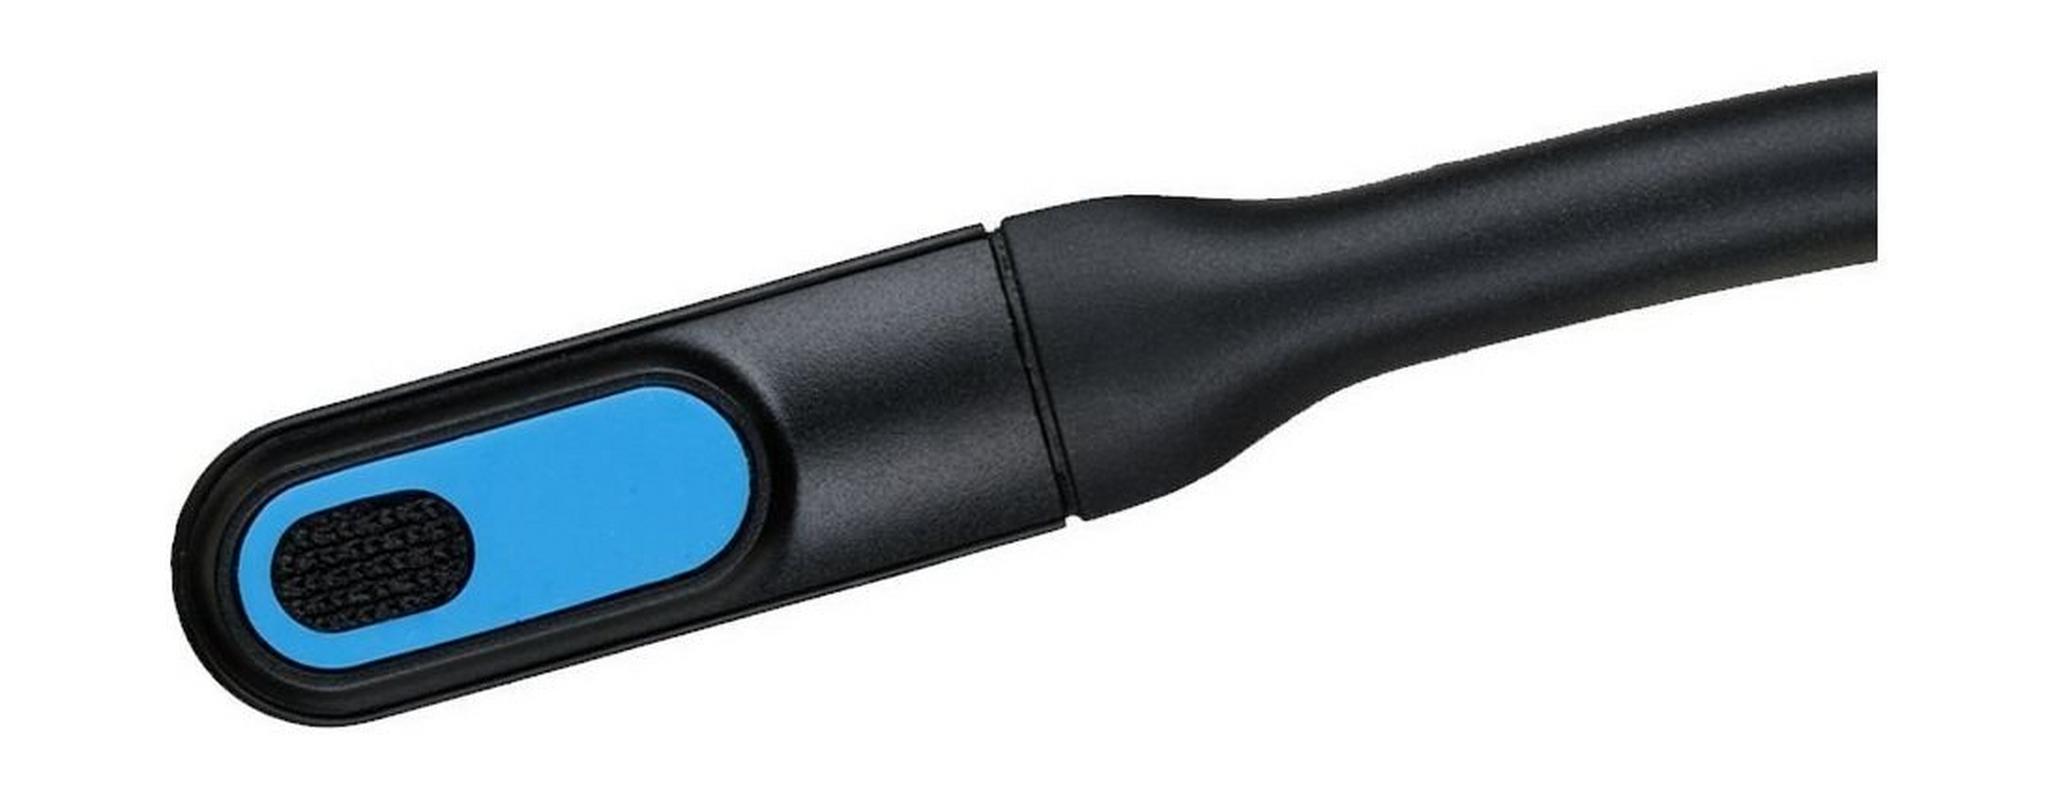 Logitech G233 Prodigy Wired Gaming Headset - Black/Blue